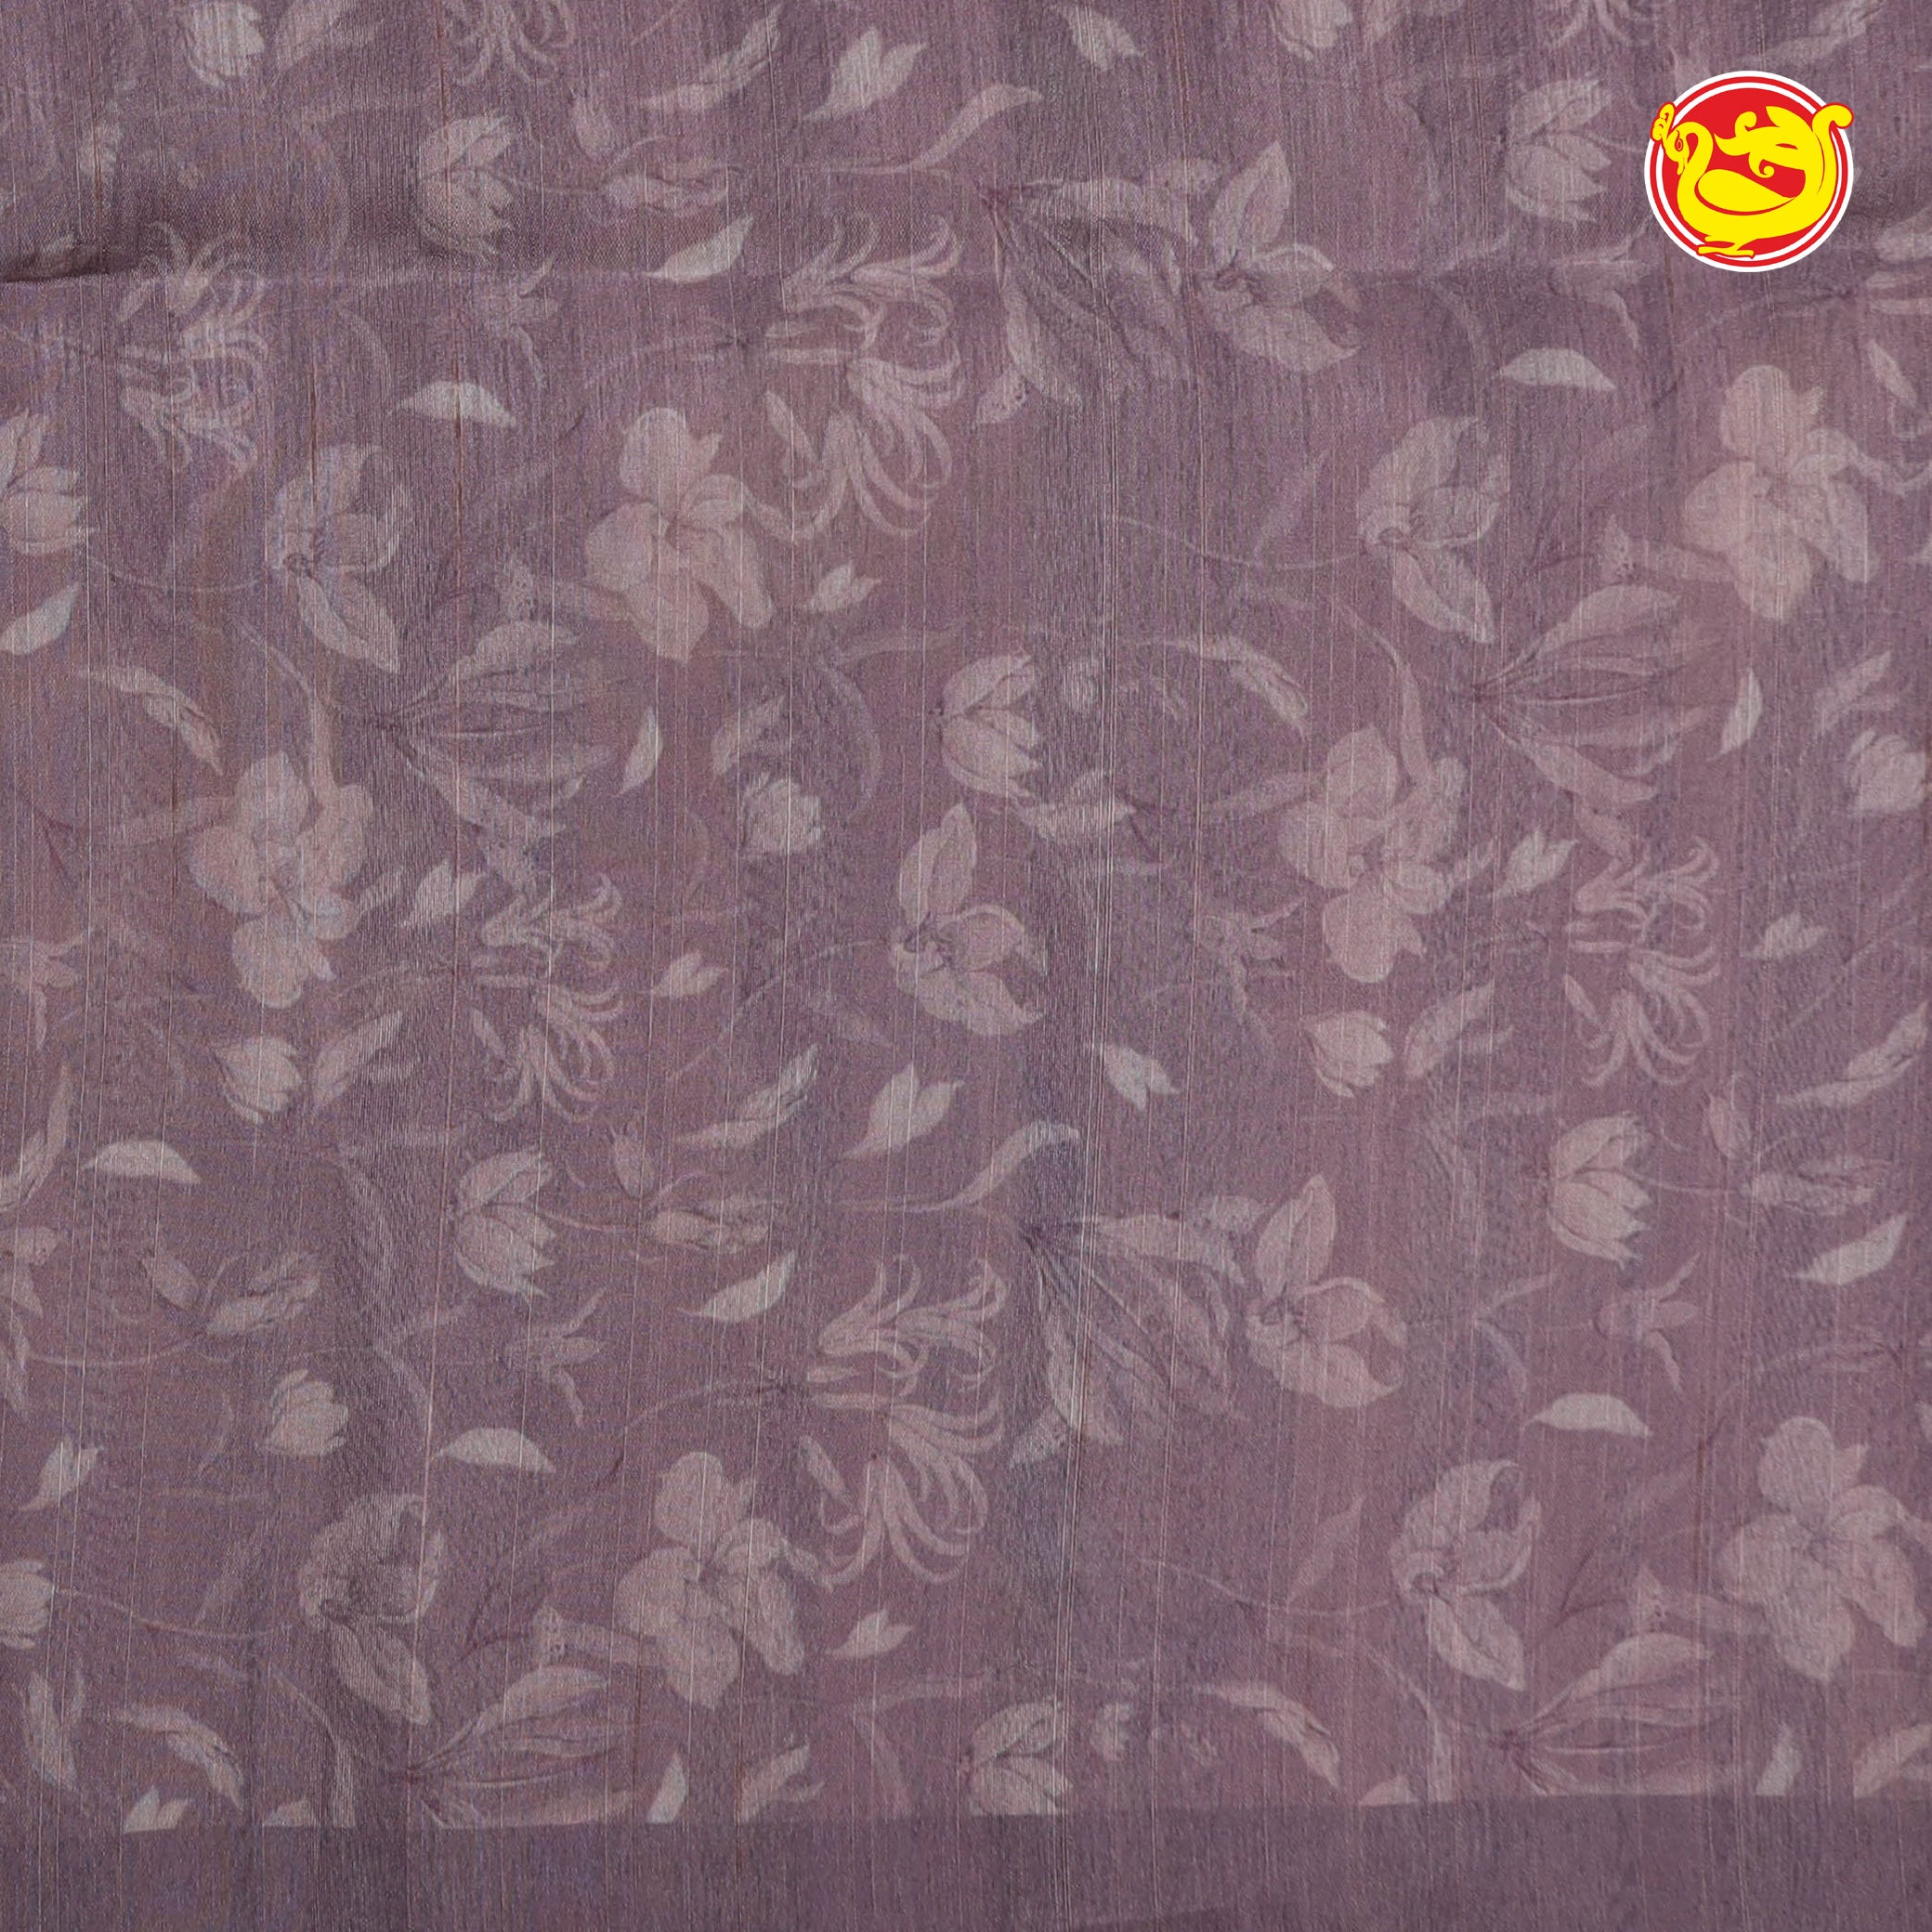 lavendar art chappa saree with digital prints